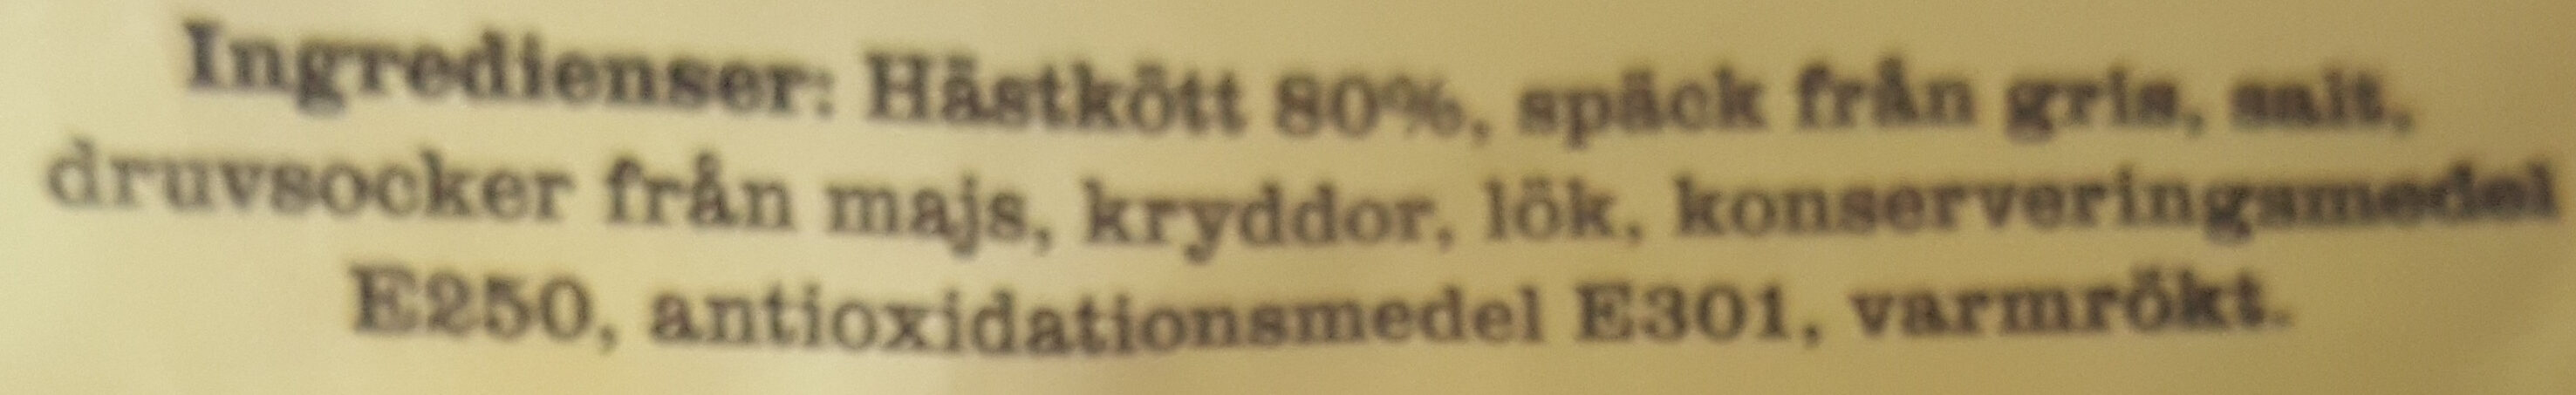 Gustafskorv - Ingredienser - sv